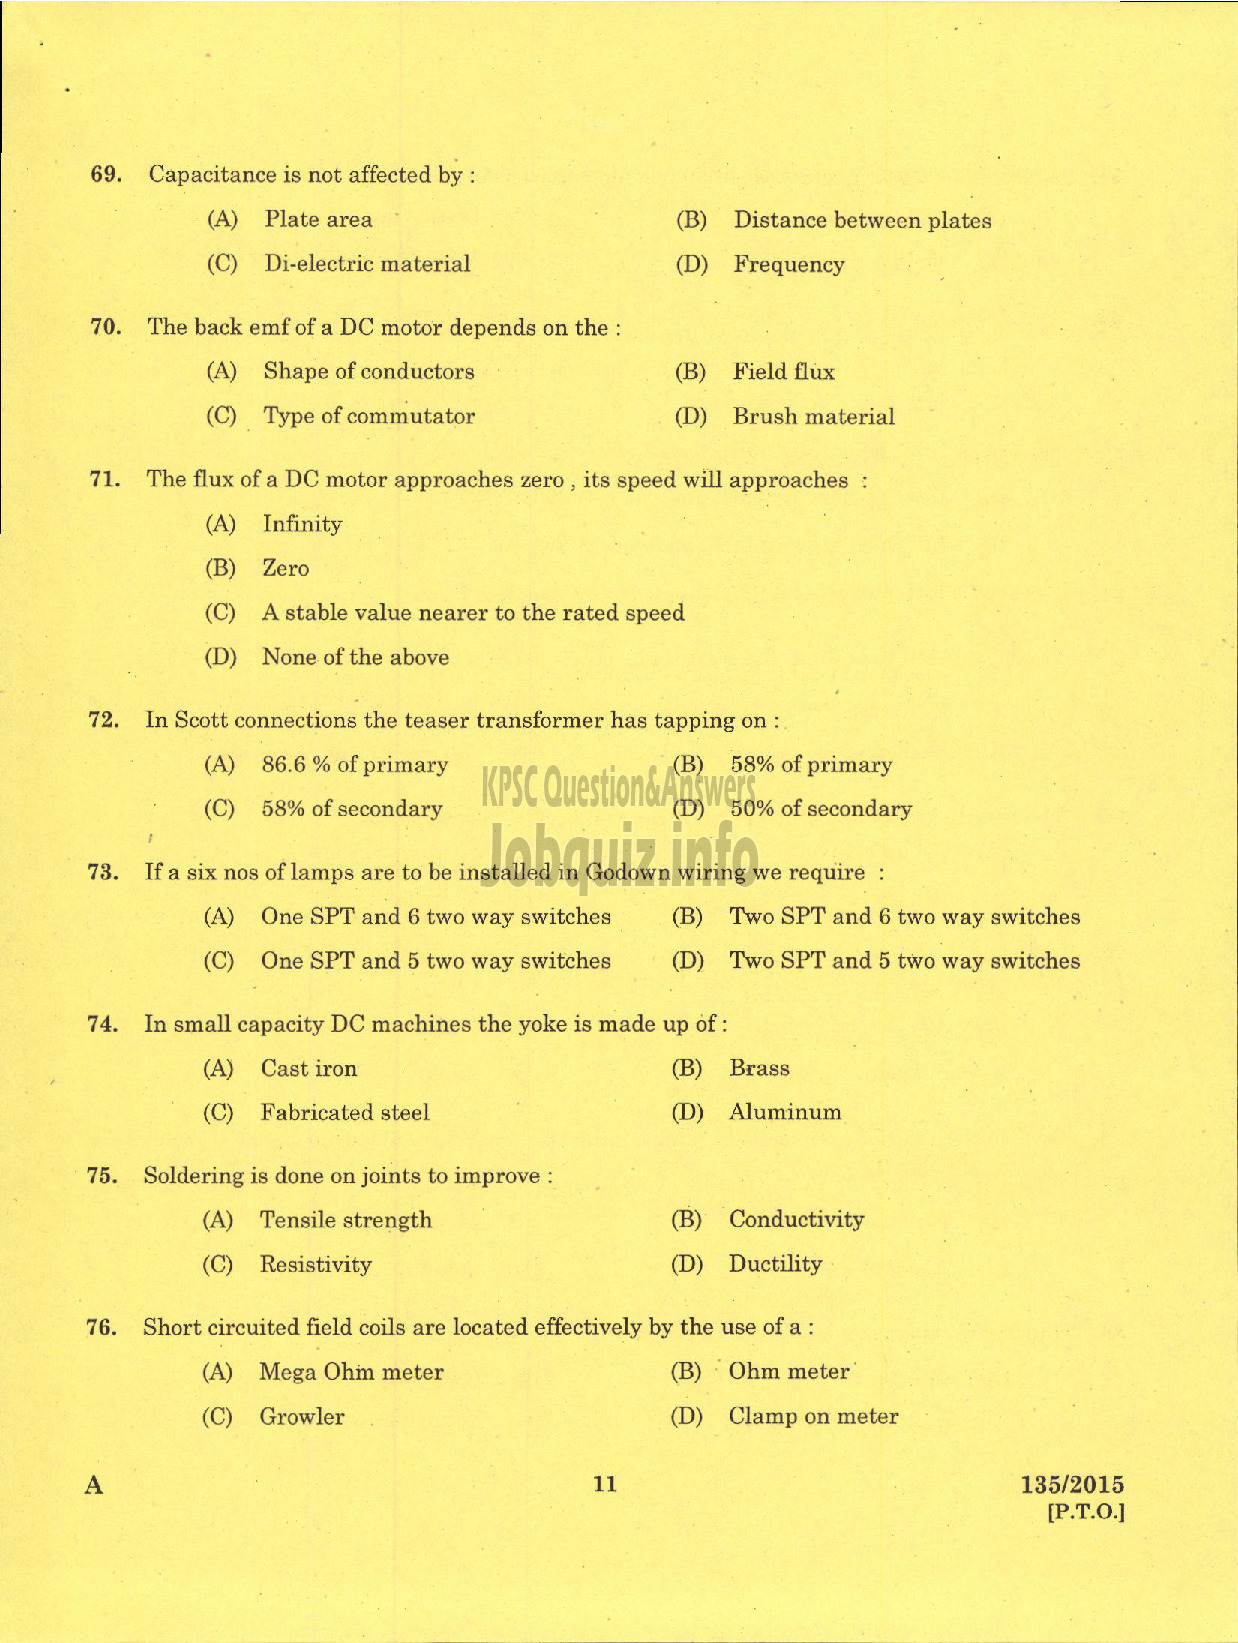 Kerala PSC Question Paper - ELECTRICIAN KSFDC LTD-9